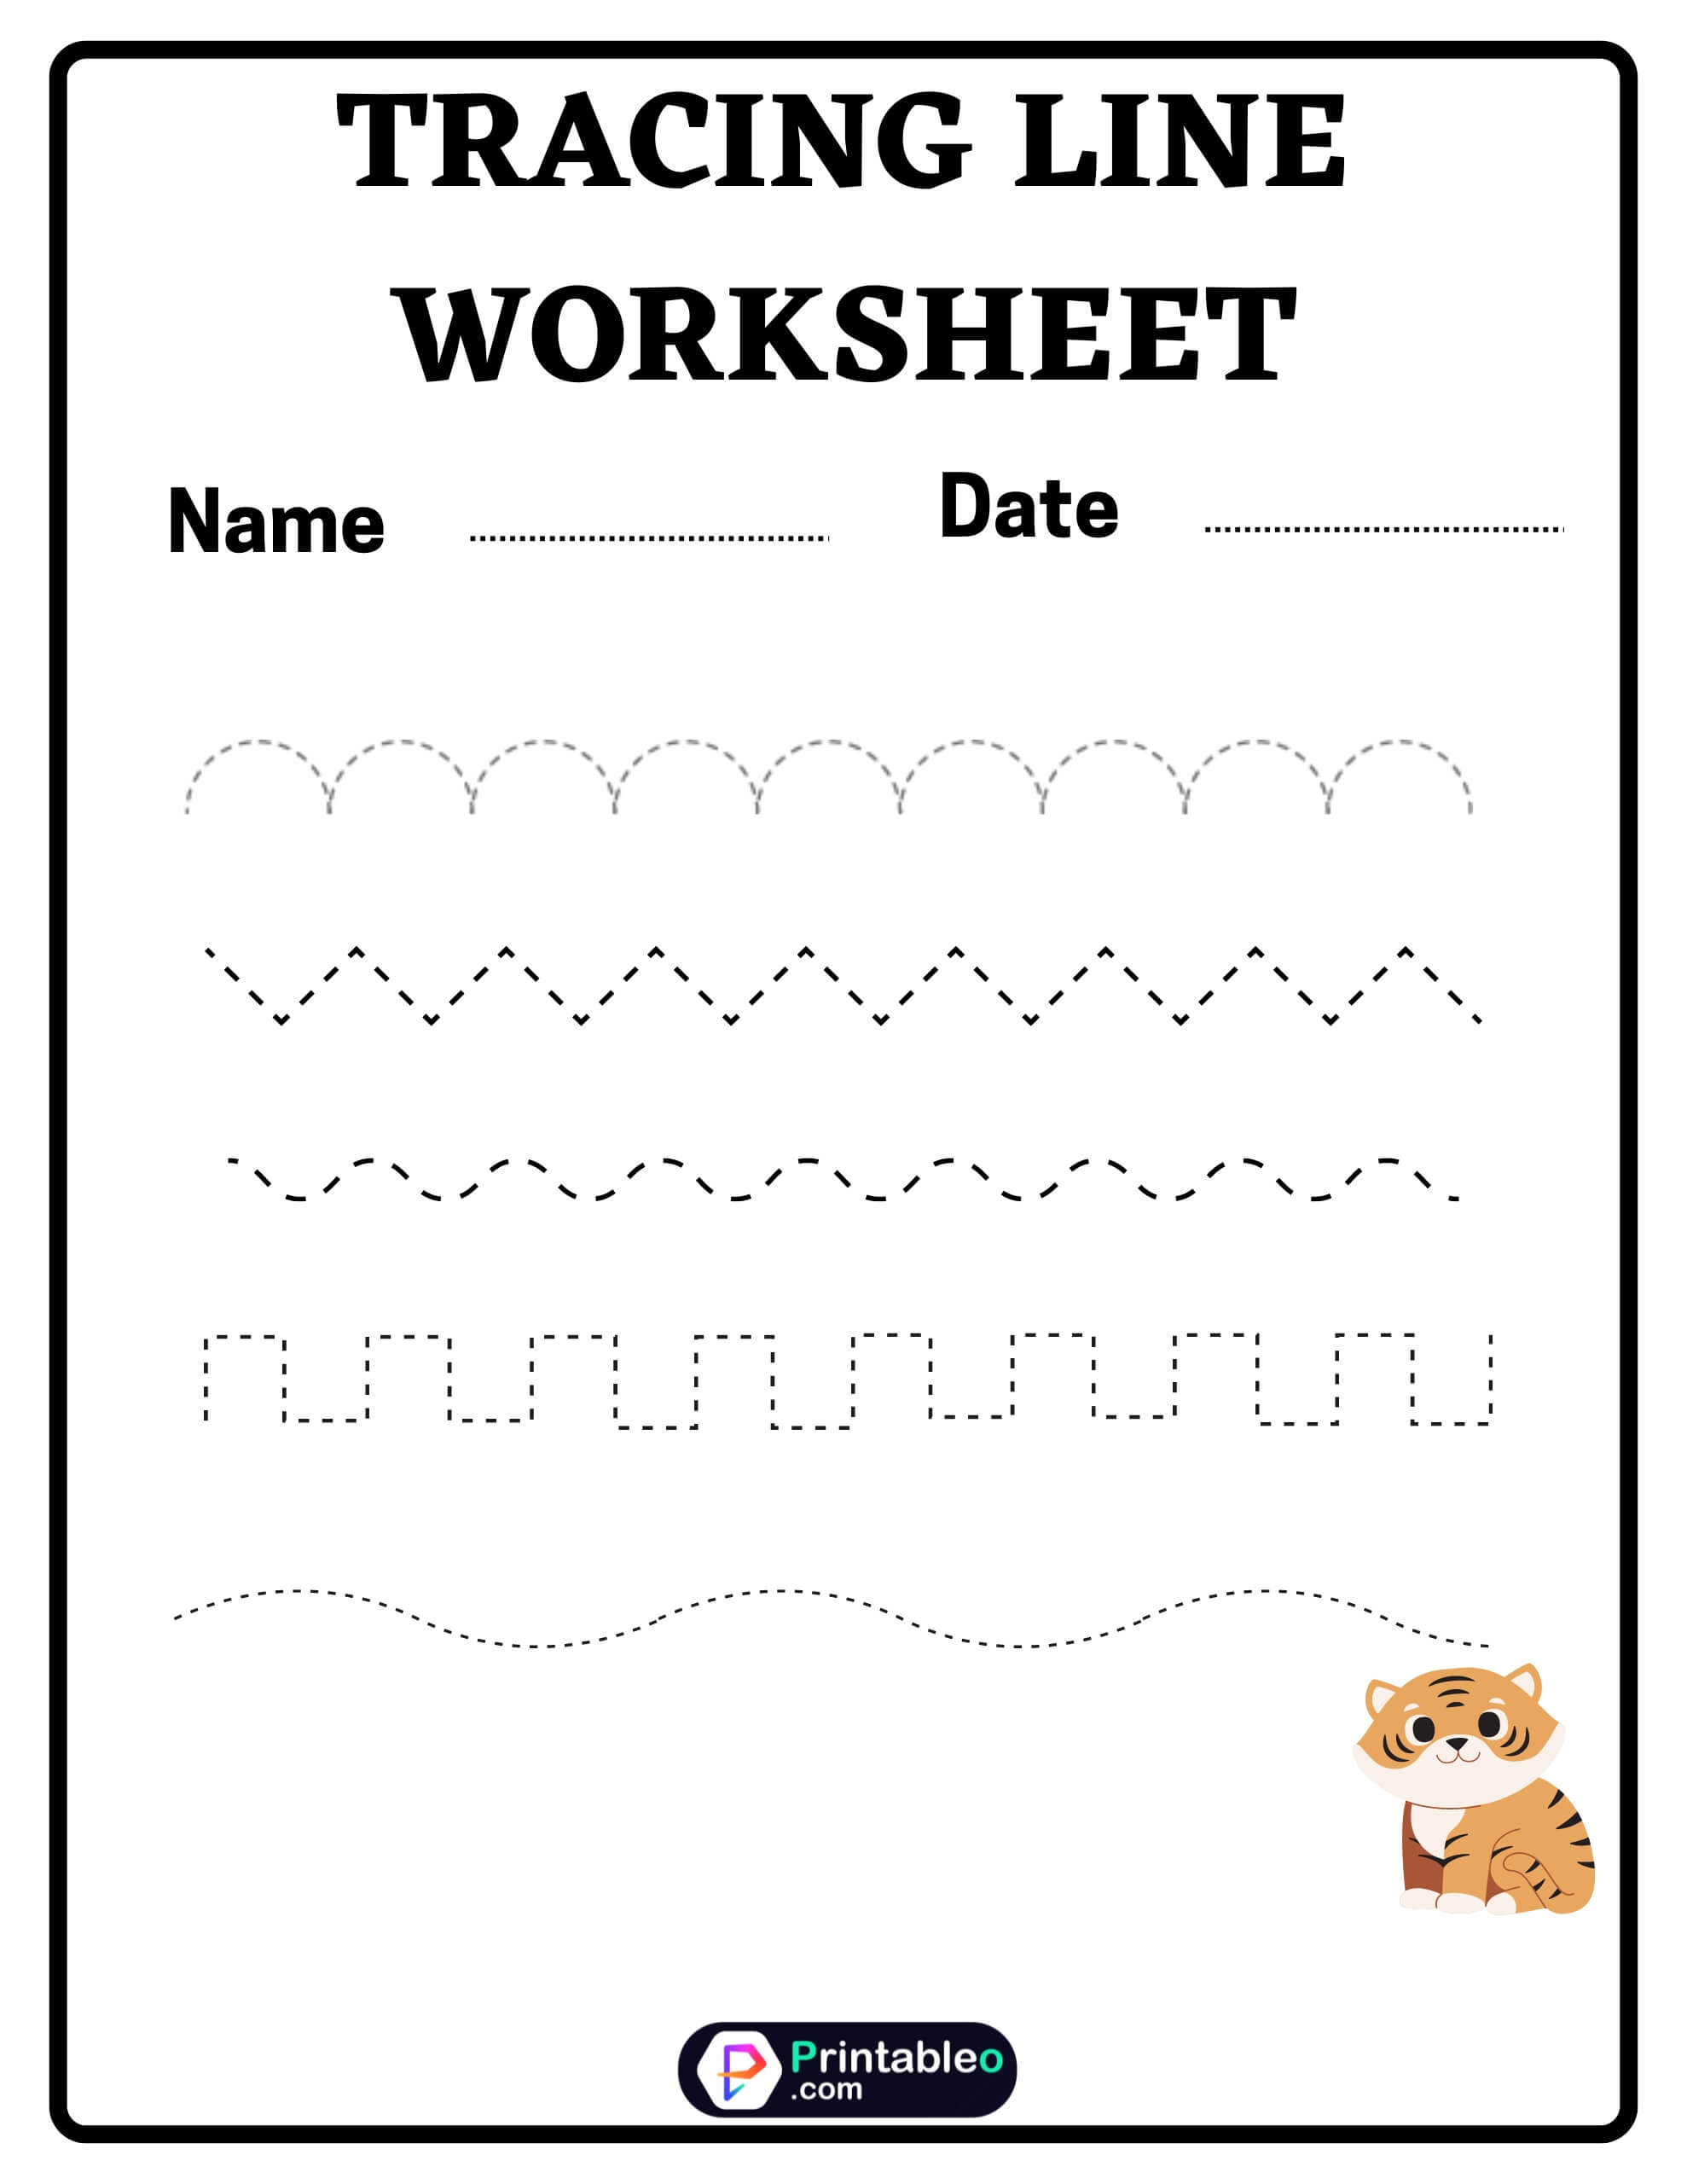 20-tracing-line-worksheet-download-free-printable-pdfs